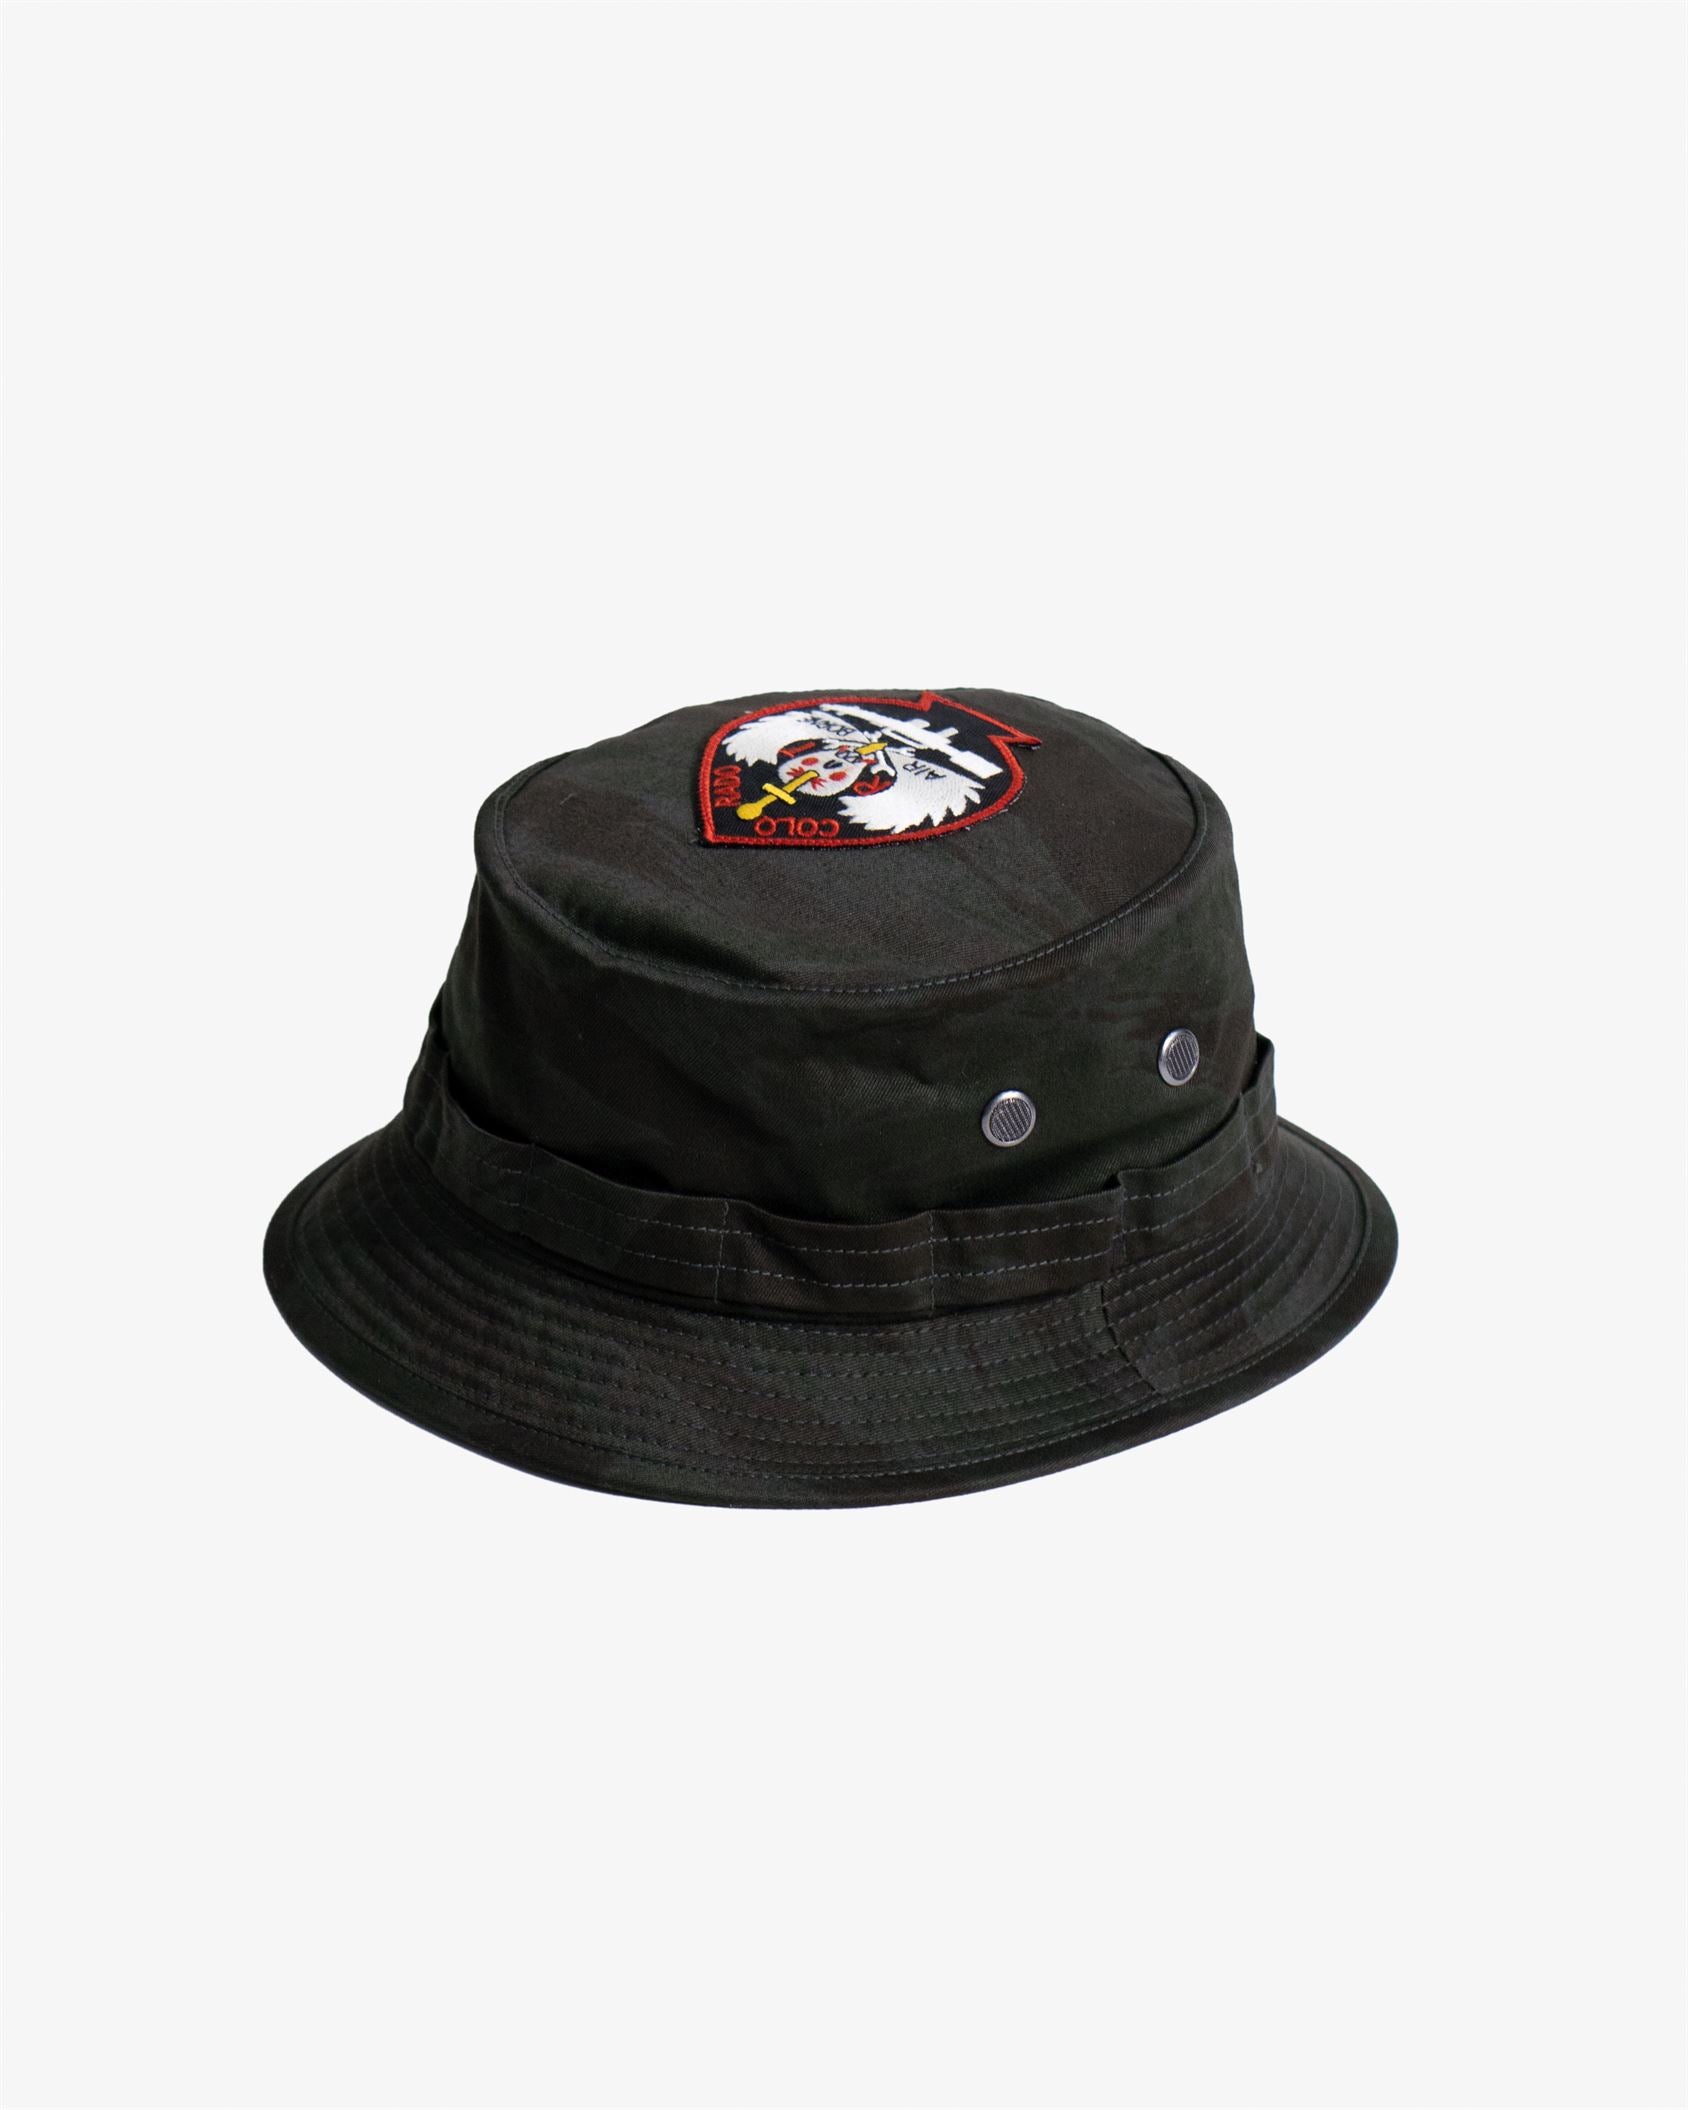 Tiger Camouflage Boonie Hat / Black-Overdye | MA22002